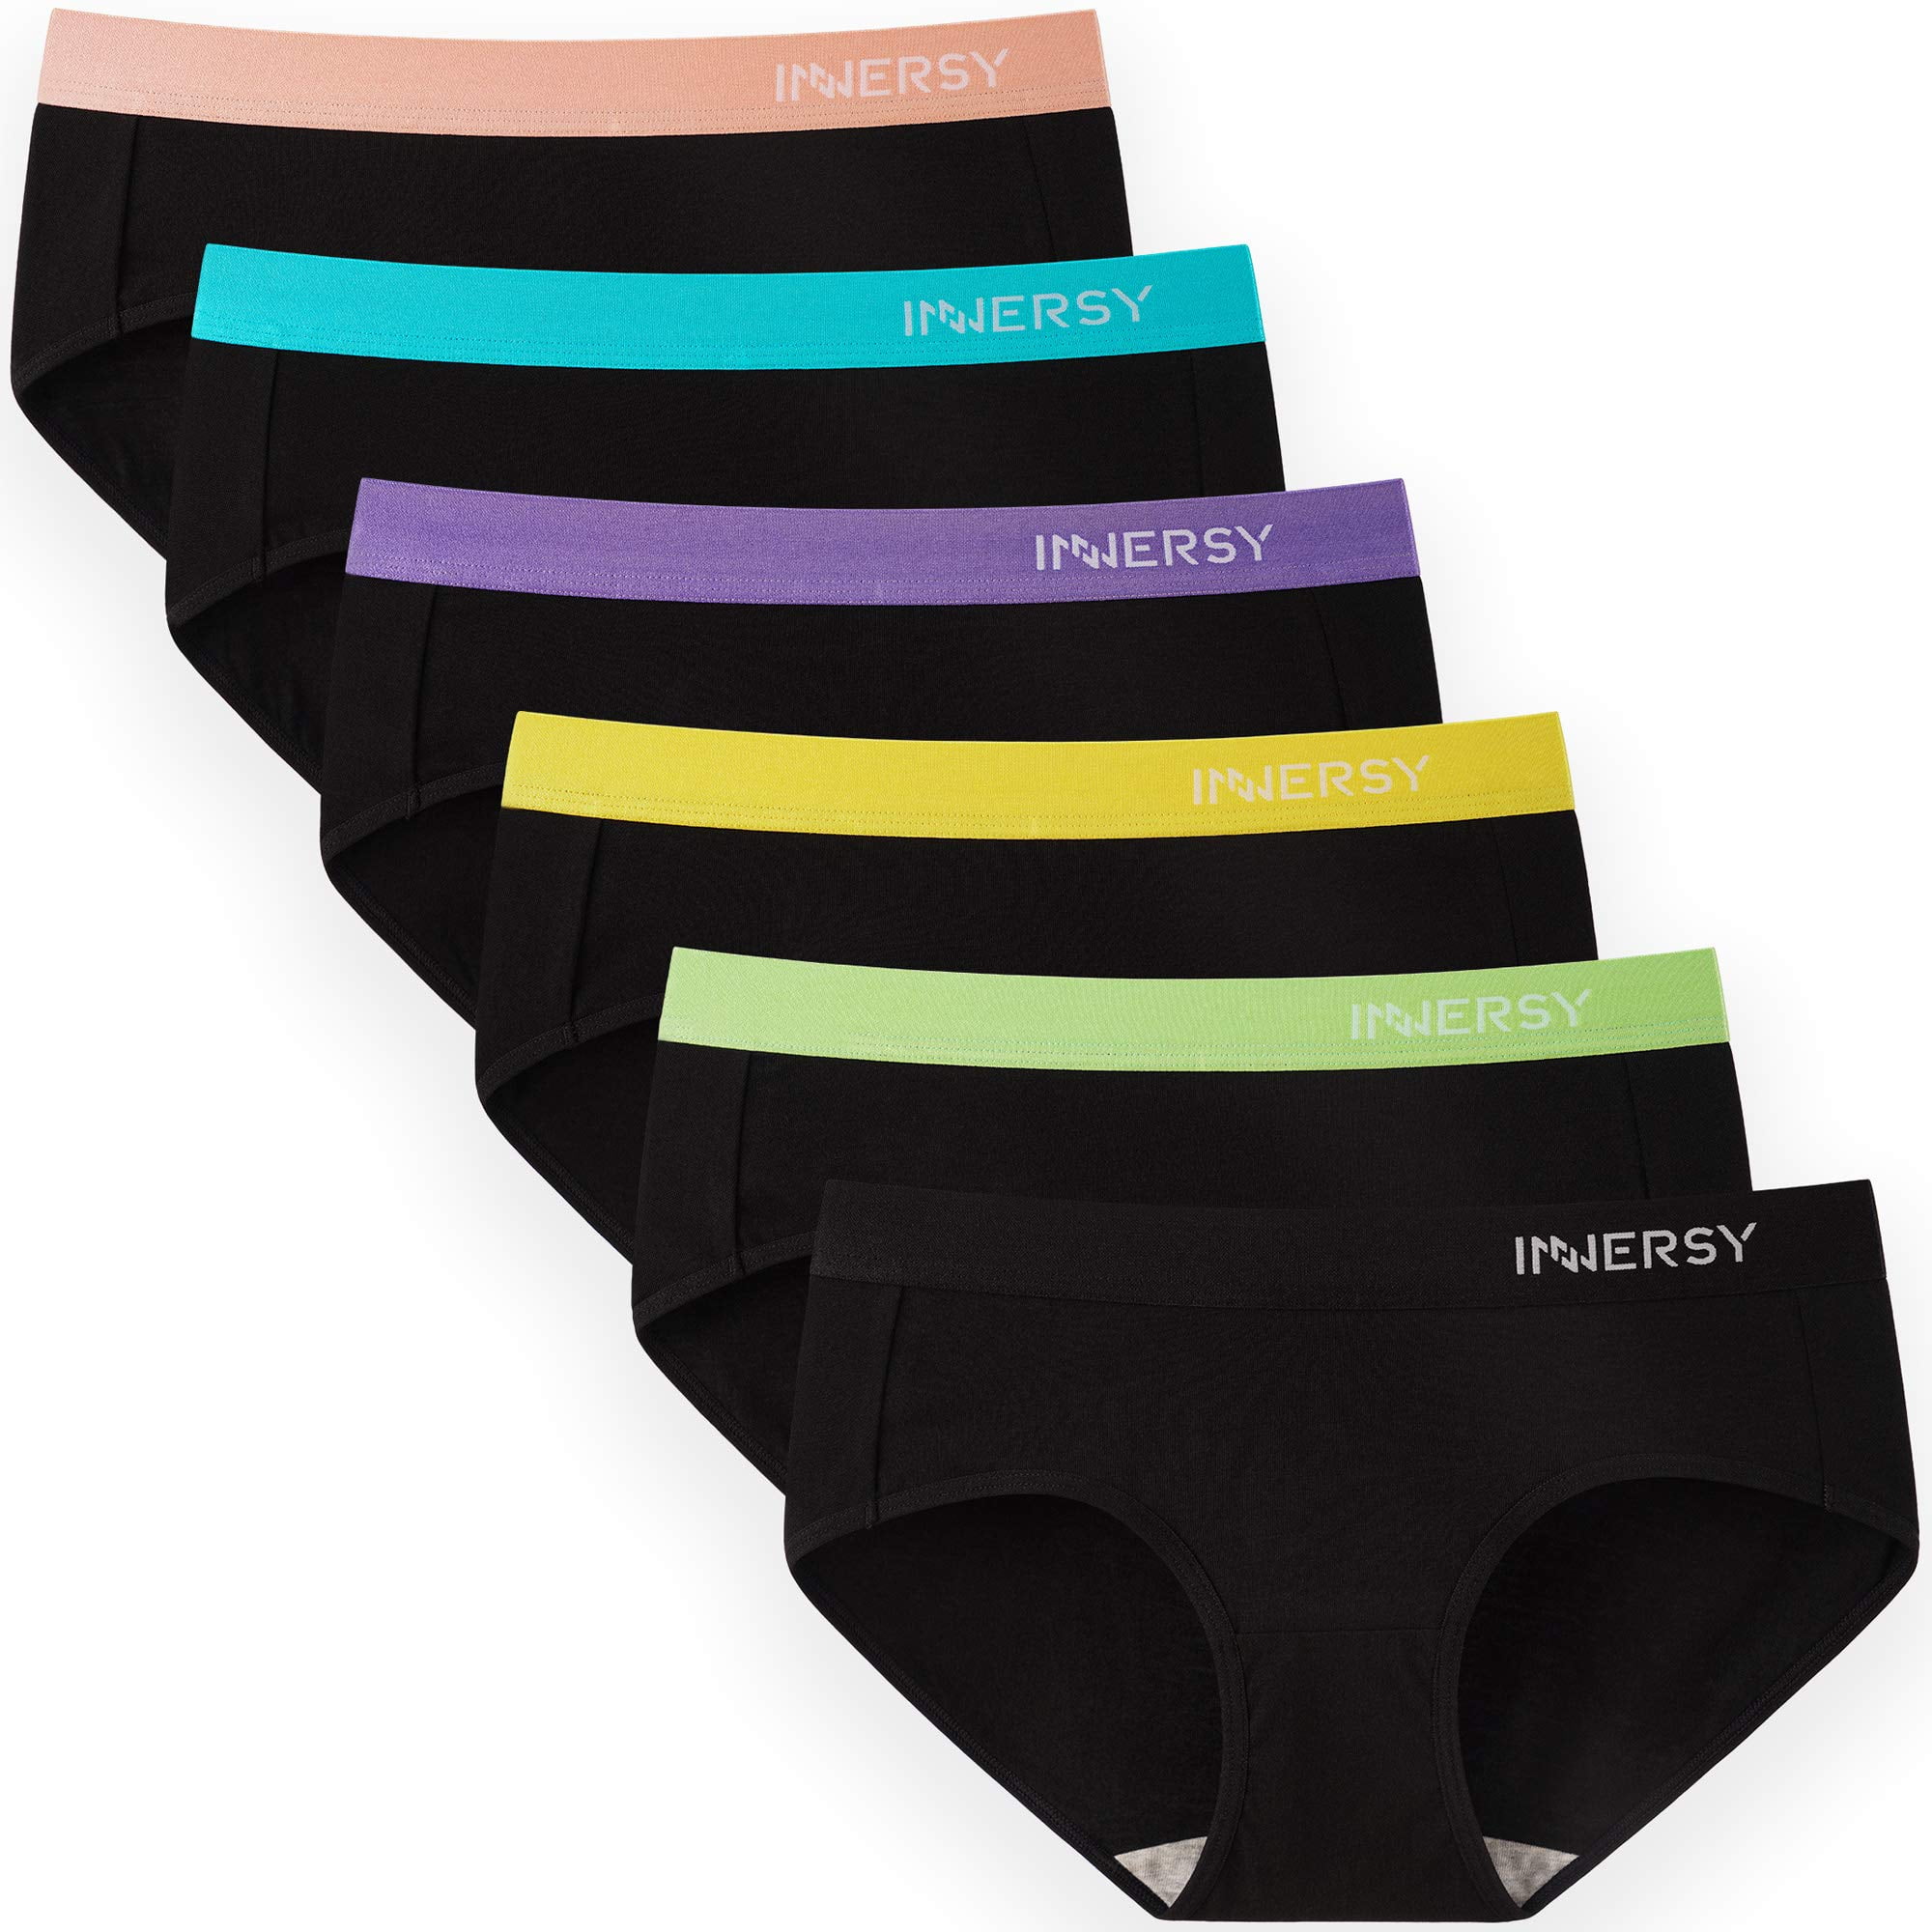 INNERSY Underwear for Women Black Cotton Hipster Panties Sport